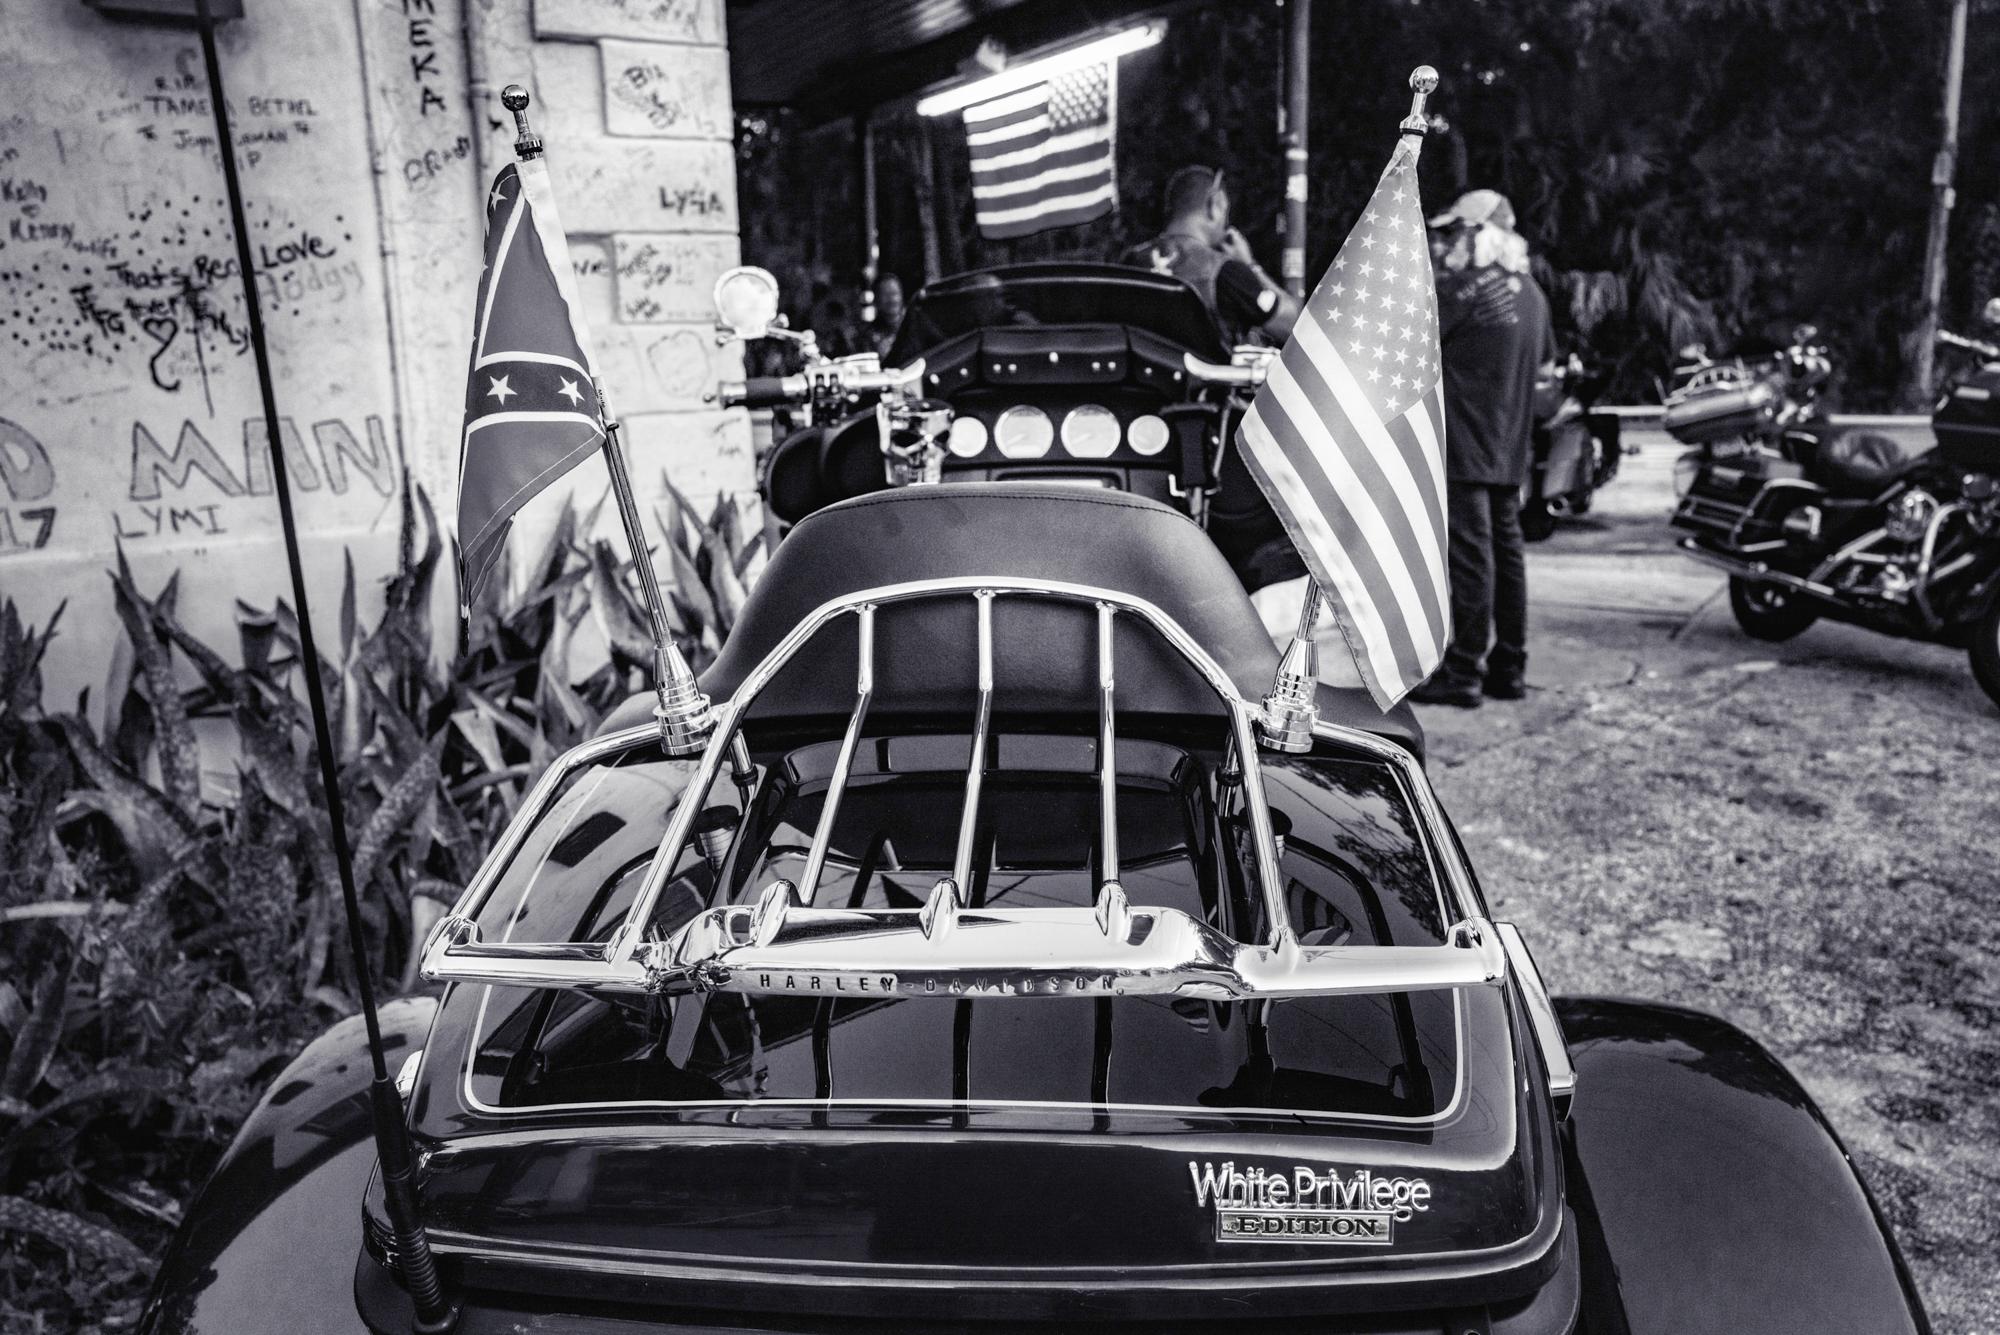 The American Biker - White Privilege Edition, Harley Davidson TriGlide,...